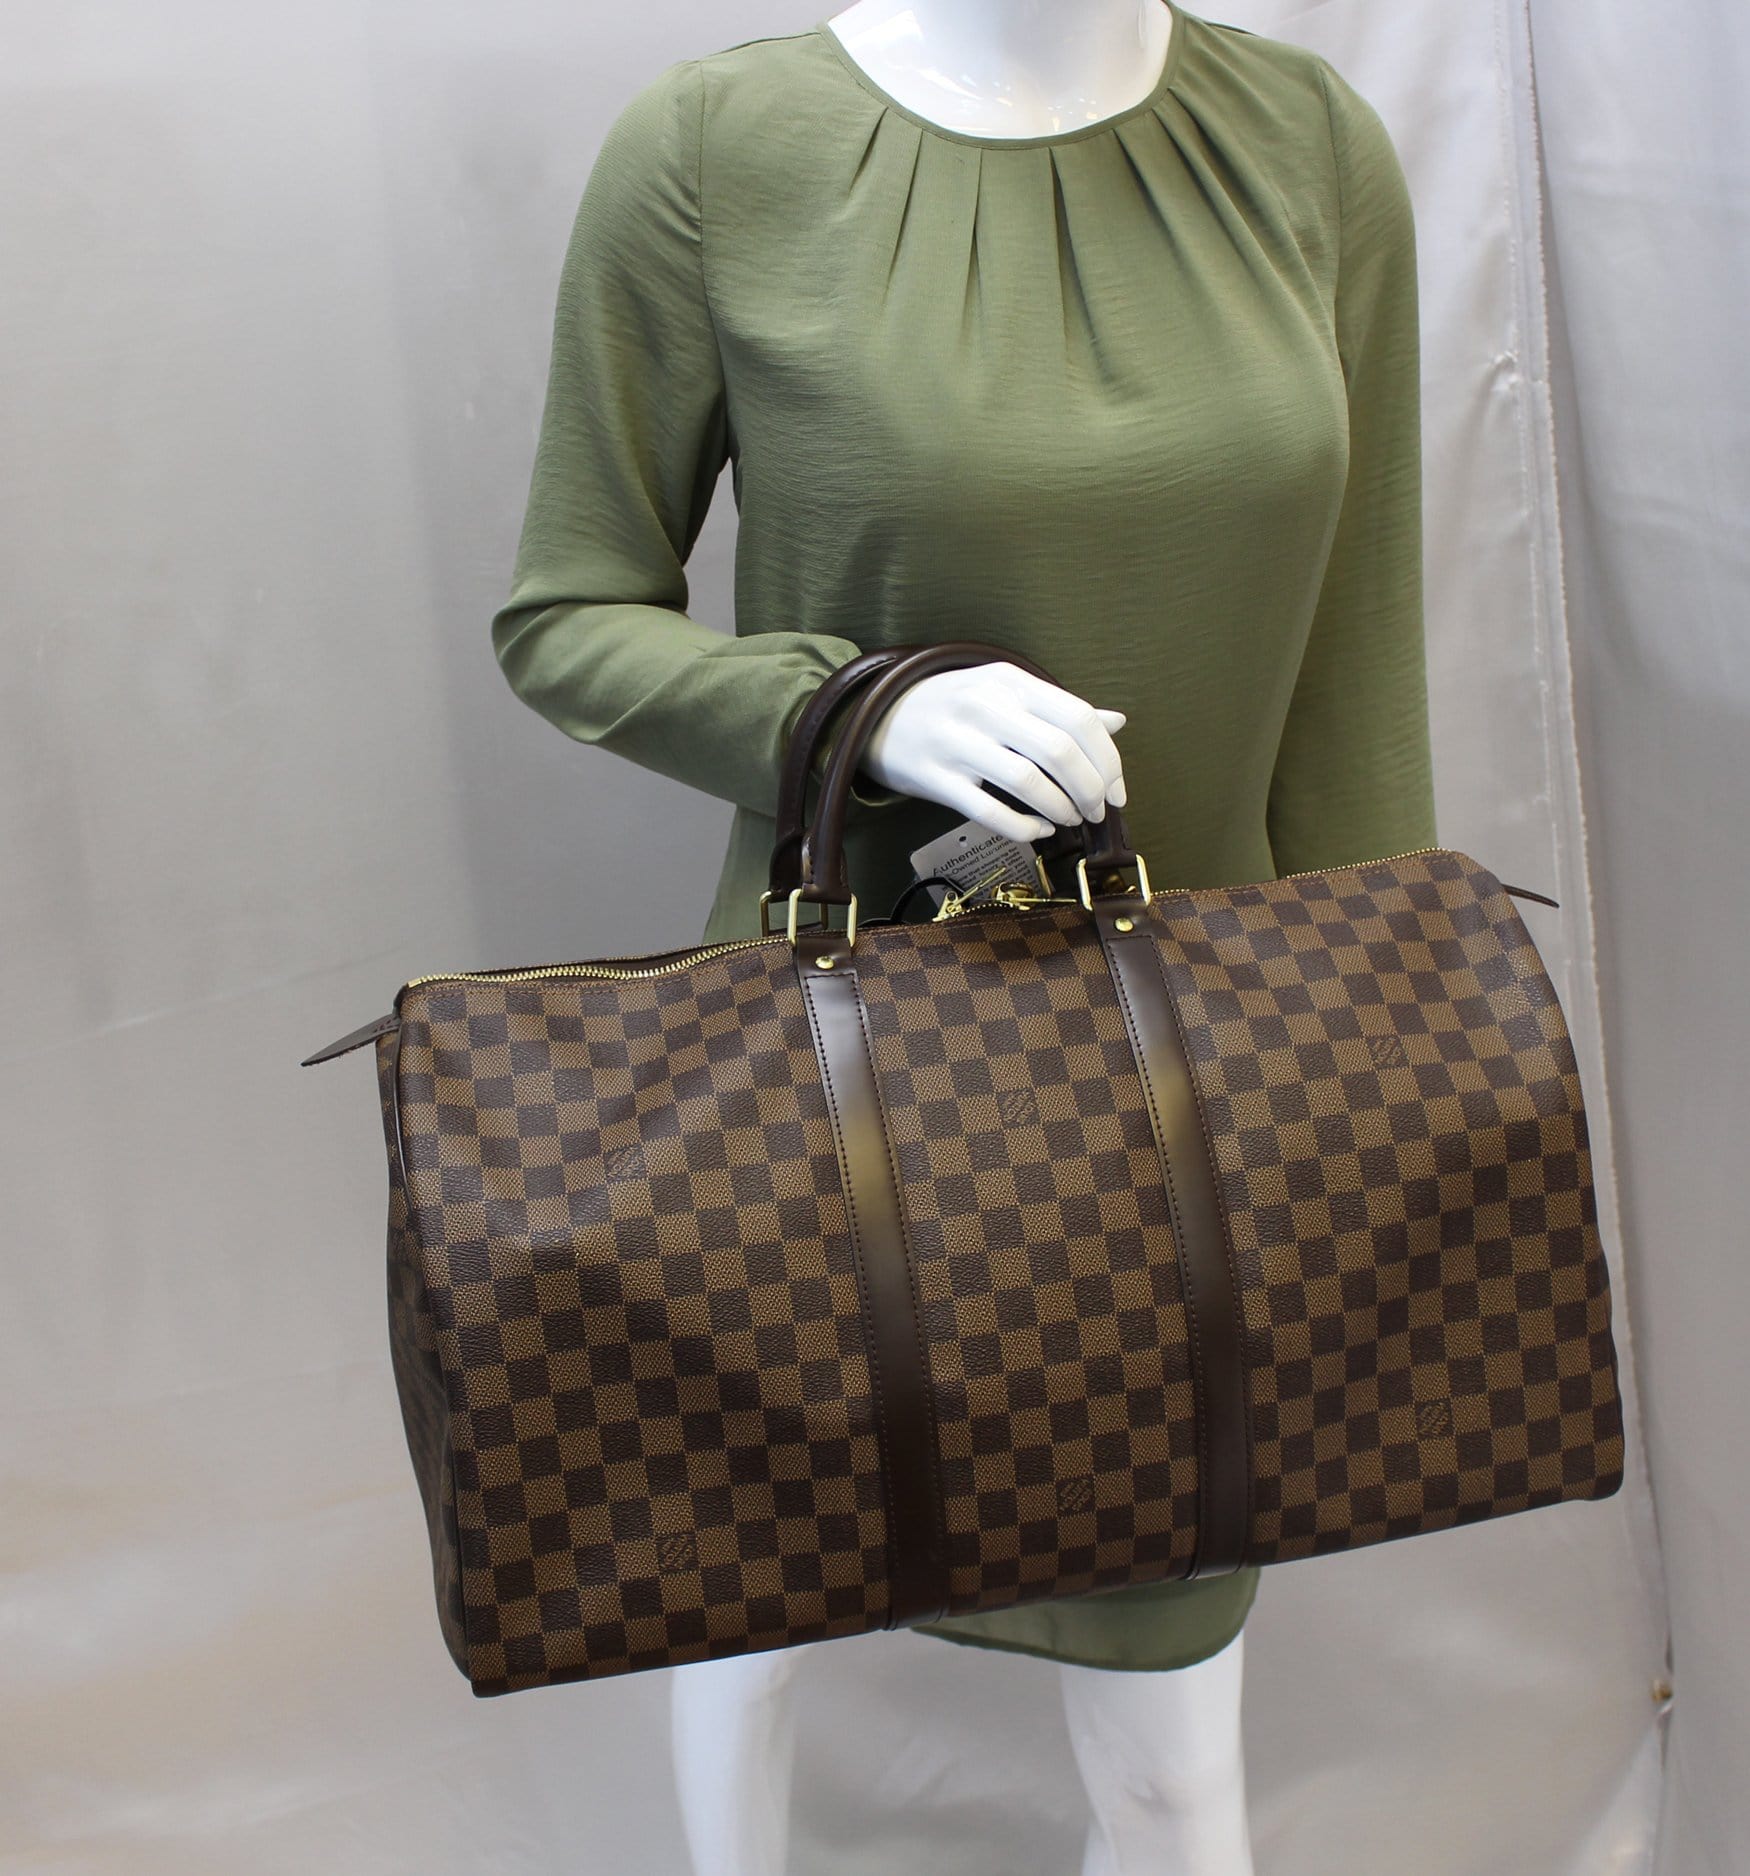 Louis Vuitton Damier Ebene Keepall 50 Duffle Bag - Brown Luggage